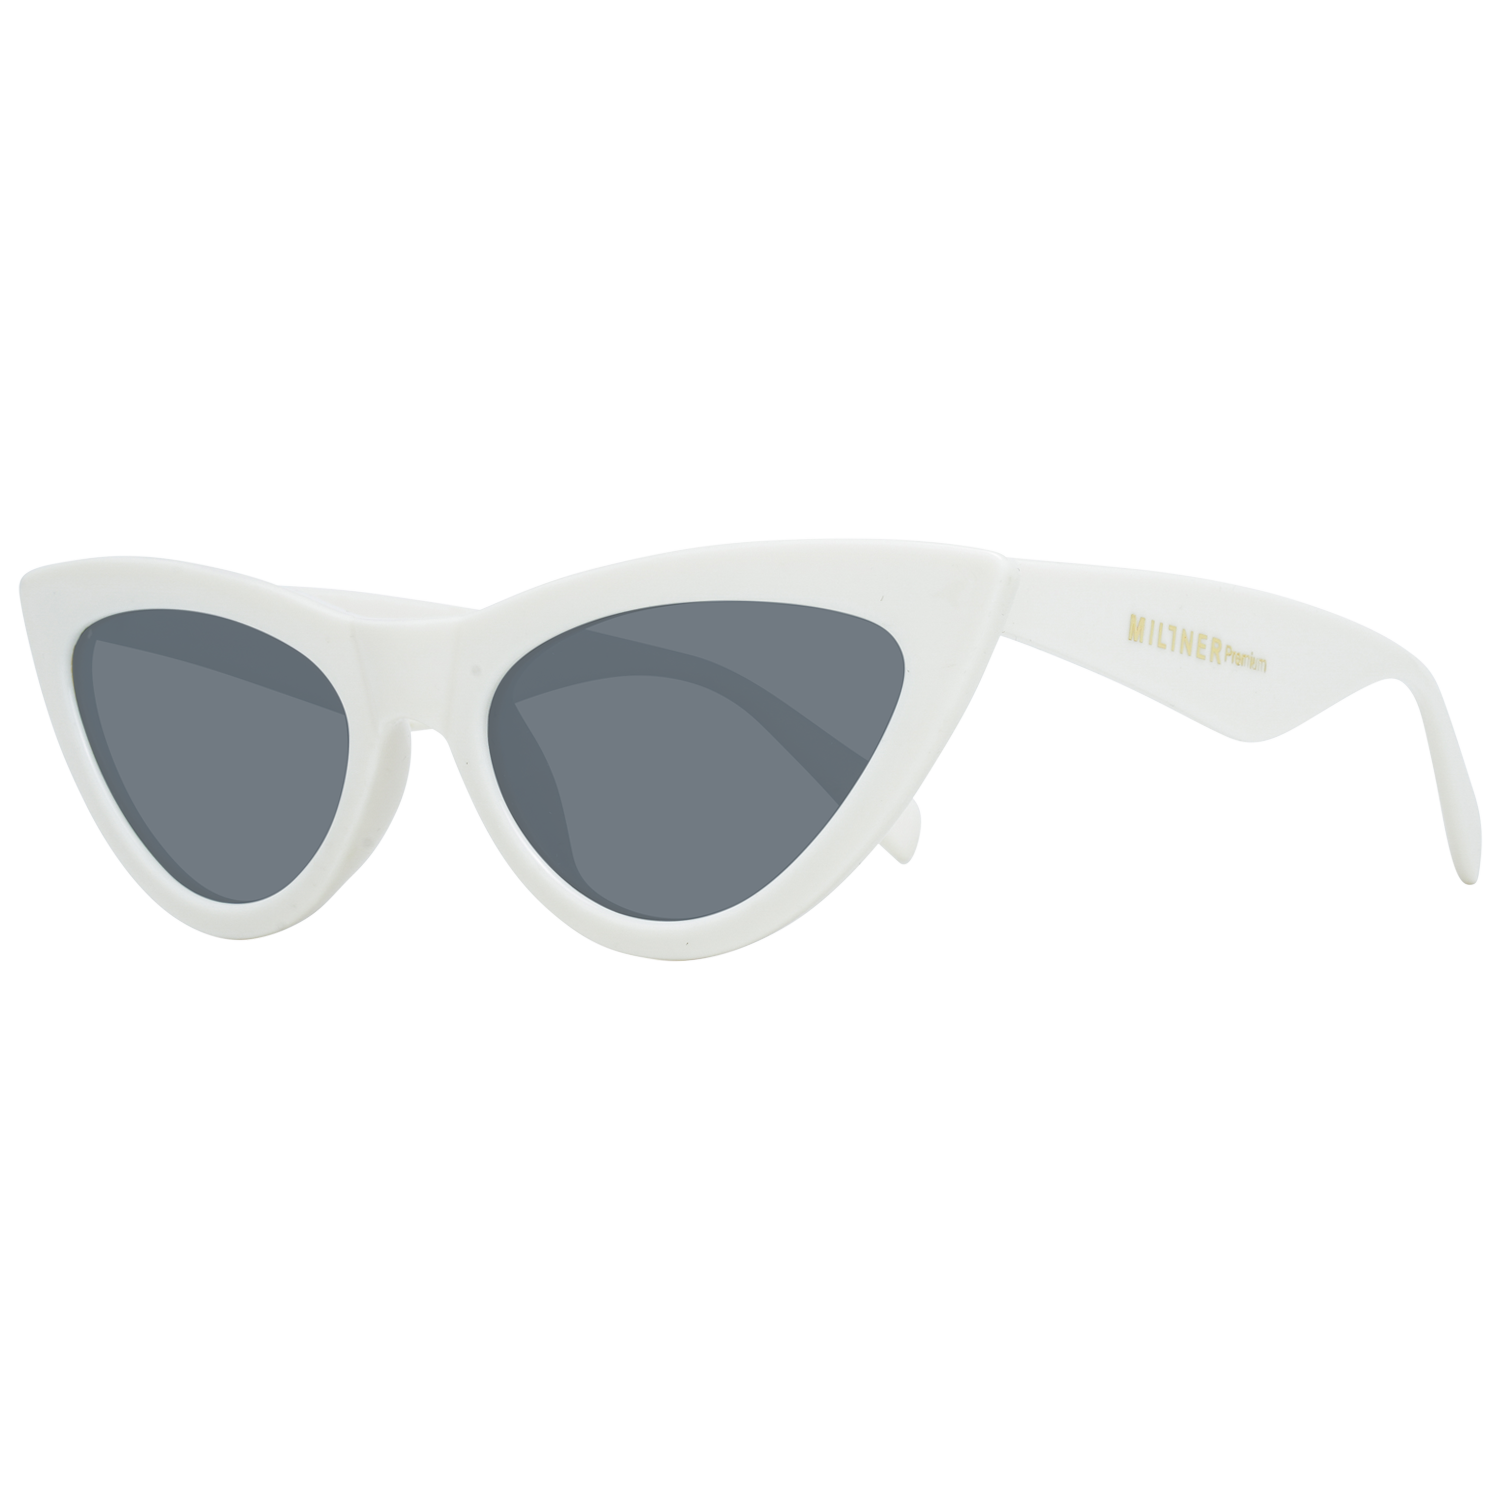 Millner Sunglasses Millner Sunglasses 0020802 Portobello Eyeglasses Eyewear UK USA Australia 